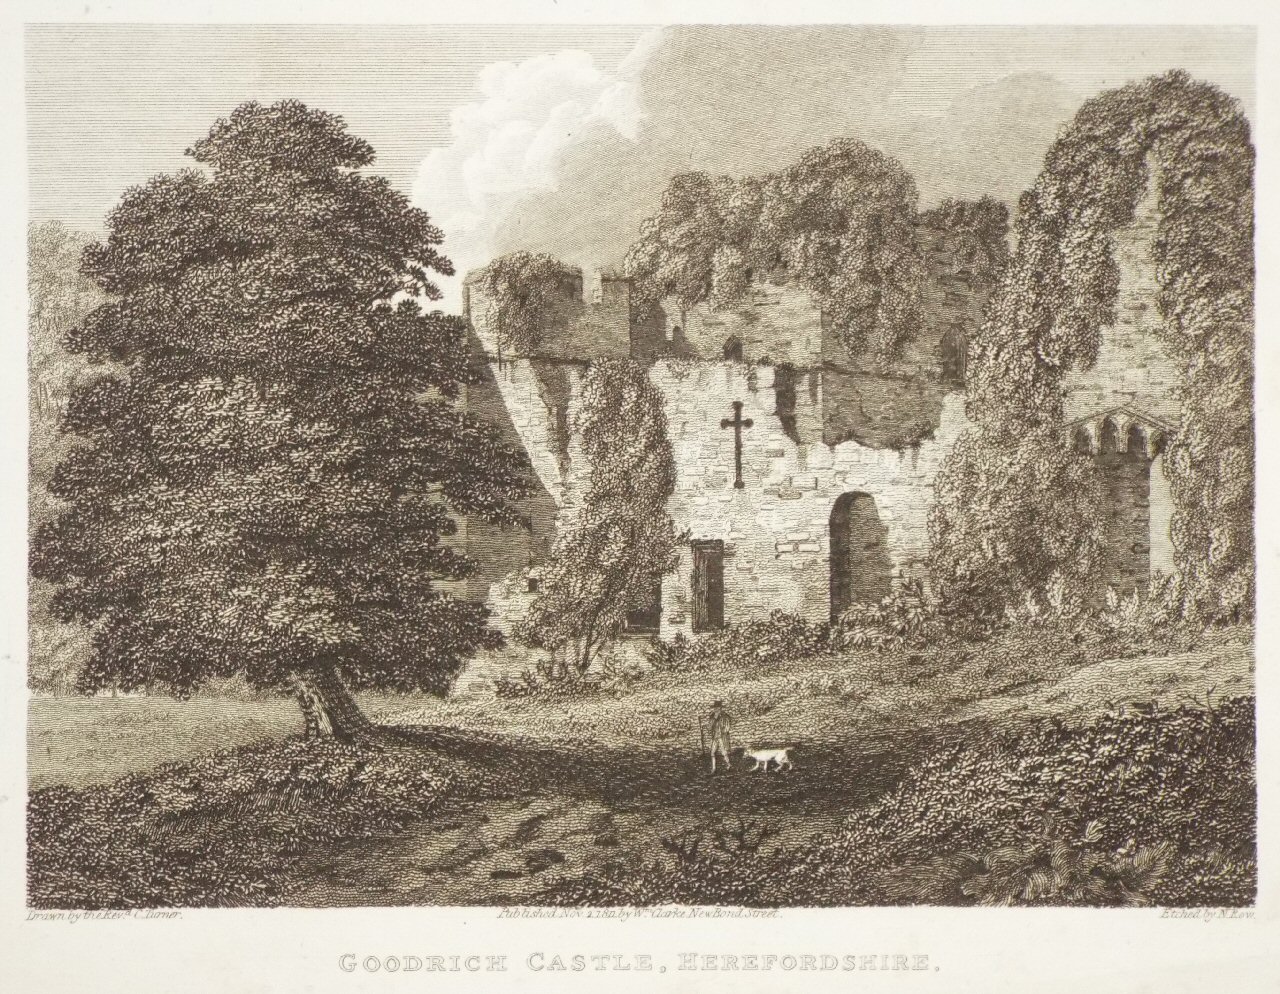 Print - Goodrich Castle, Herefordshire. - Row